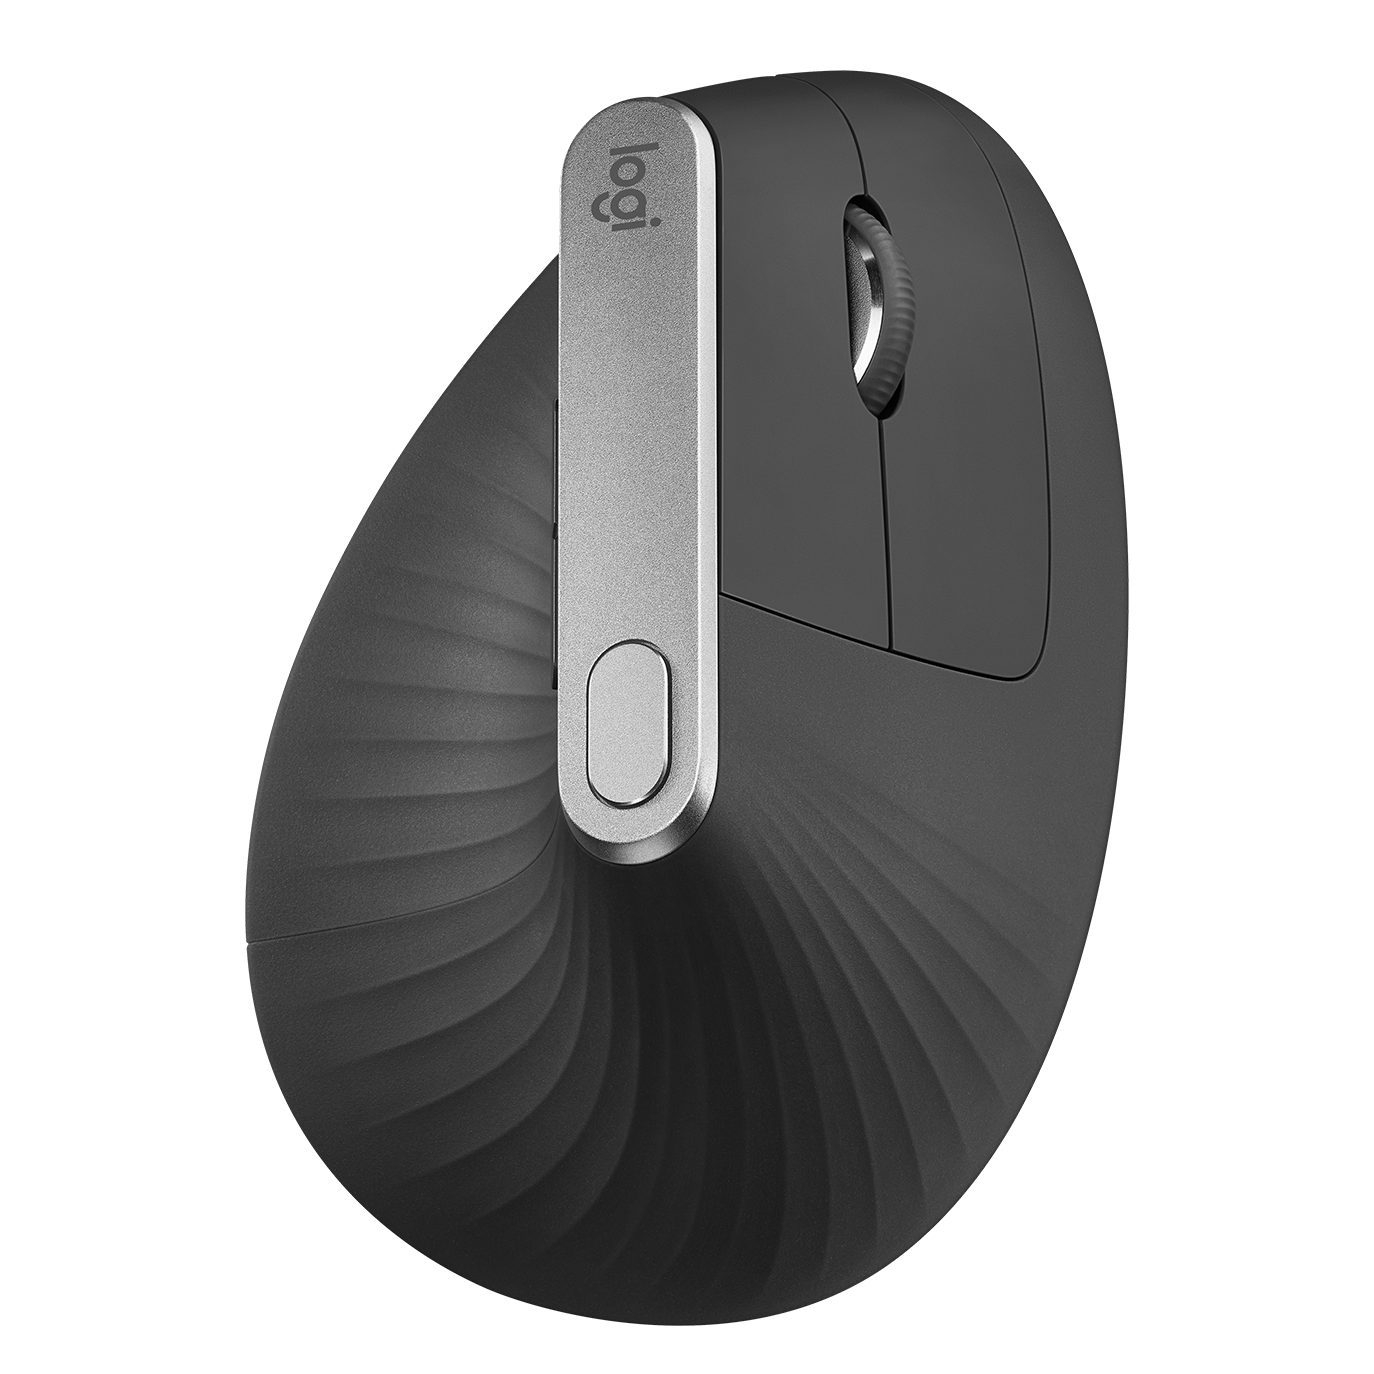 Logitech MX Vertical Advanced Ergonomic Wireless Mouse